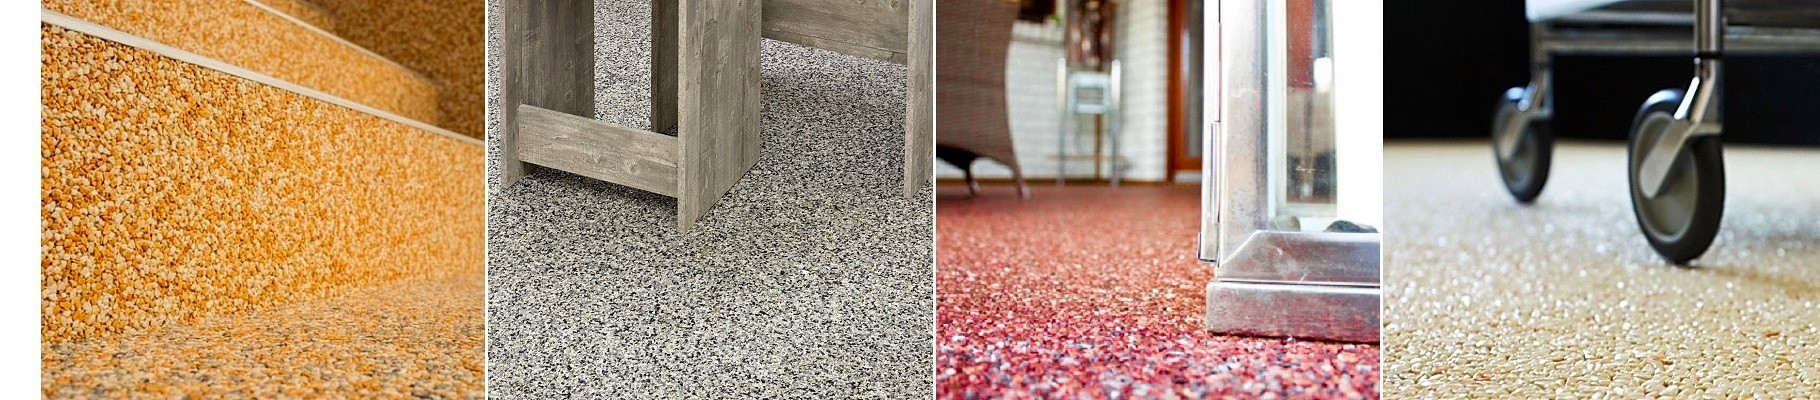 Kamenný koberec - Interiér 1-2mm - Jednobarevné